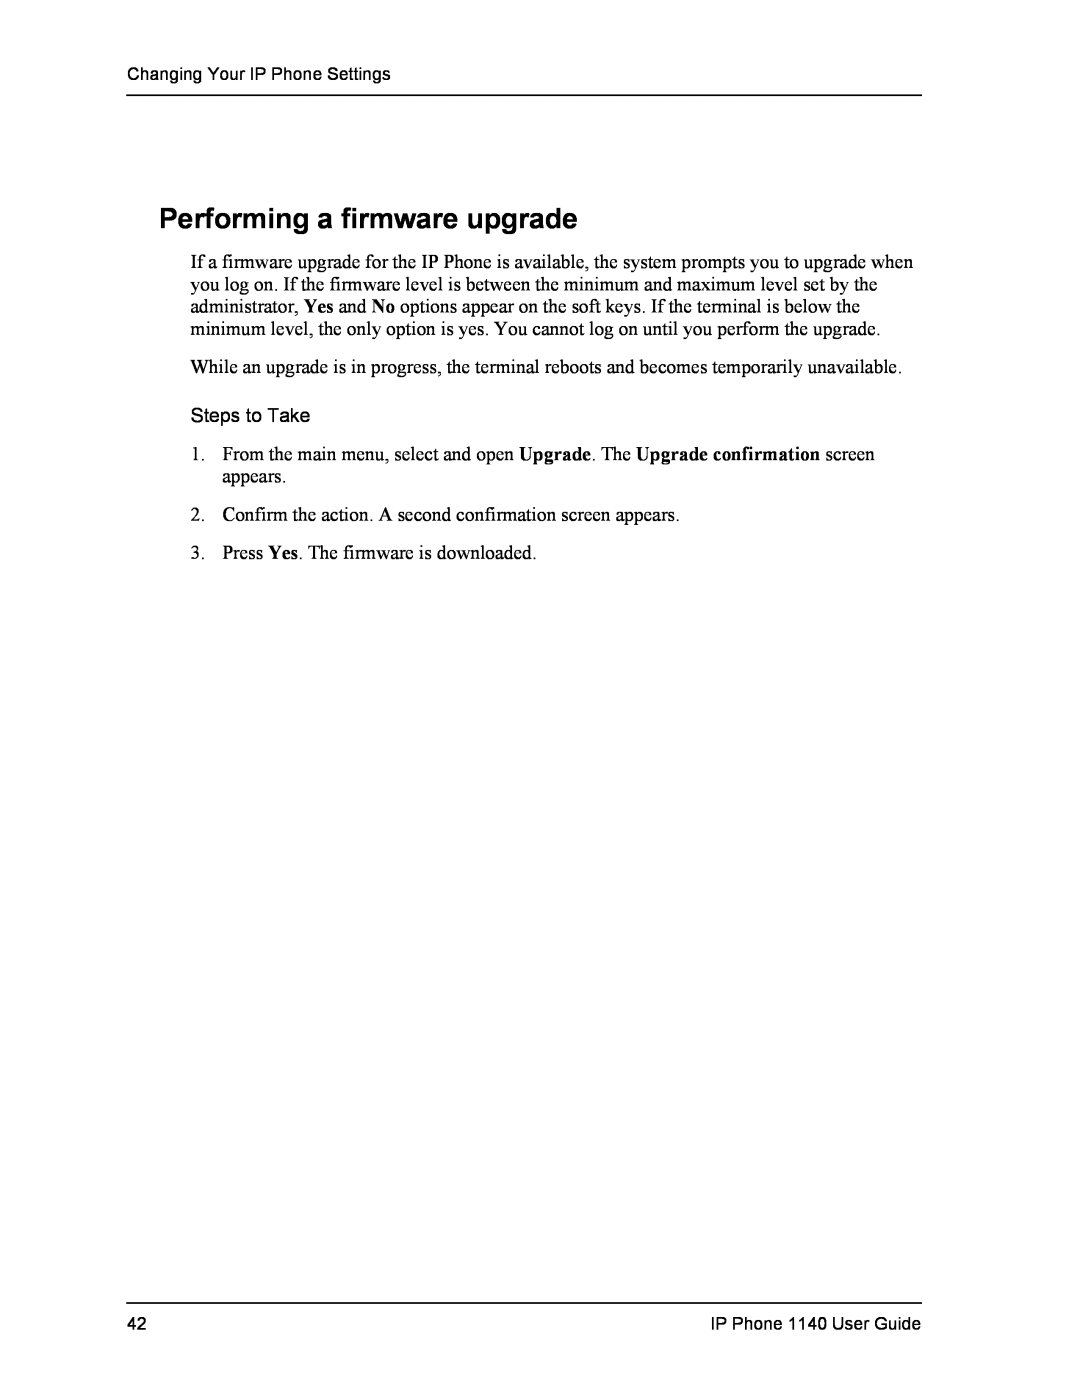 DeWalt 1140 manual Performing a firmware upgrade 